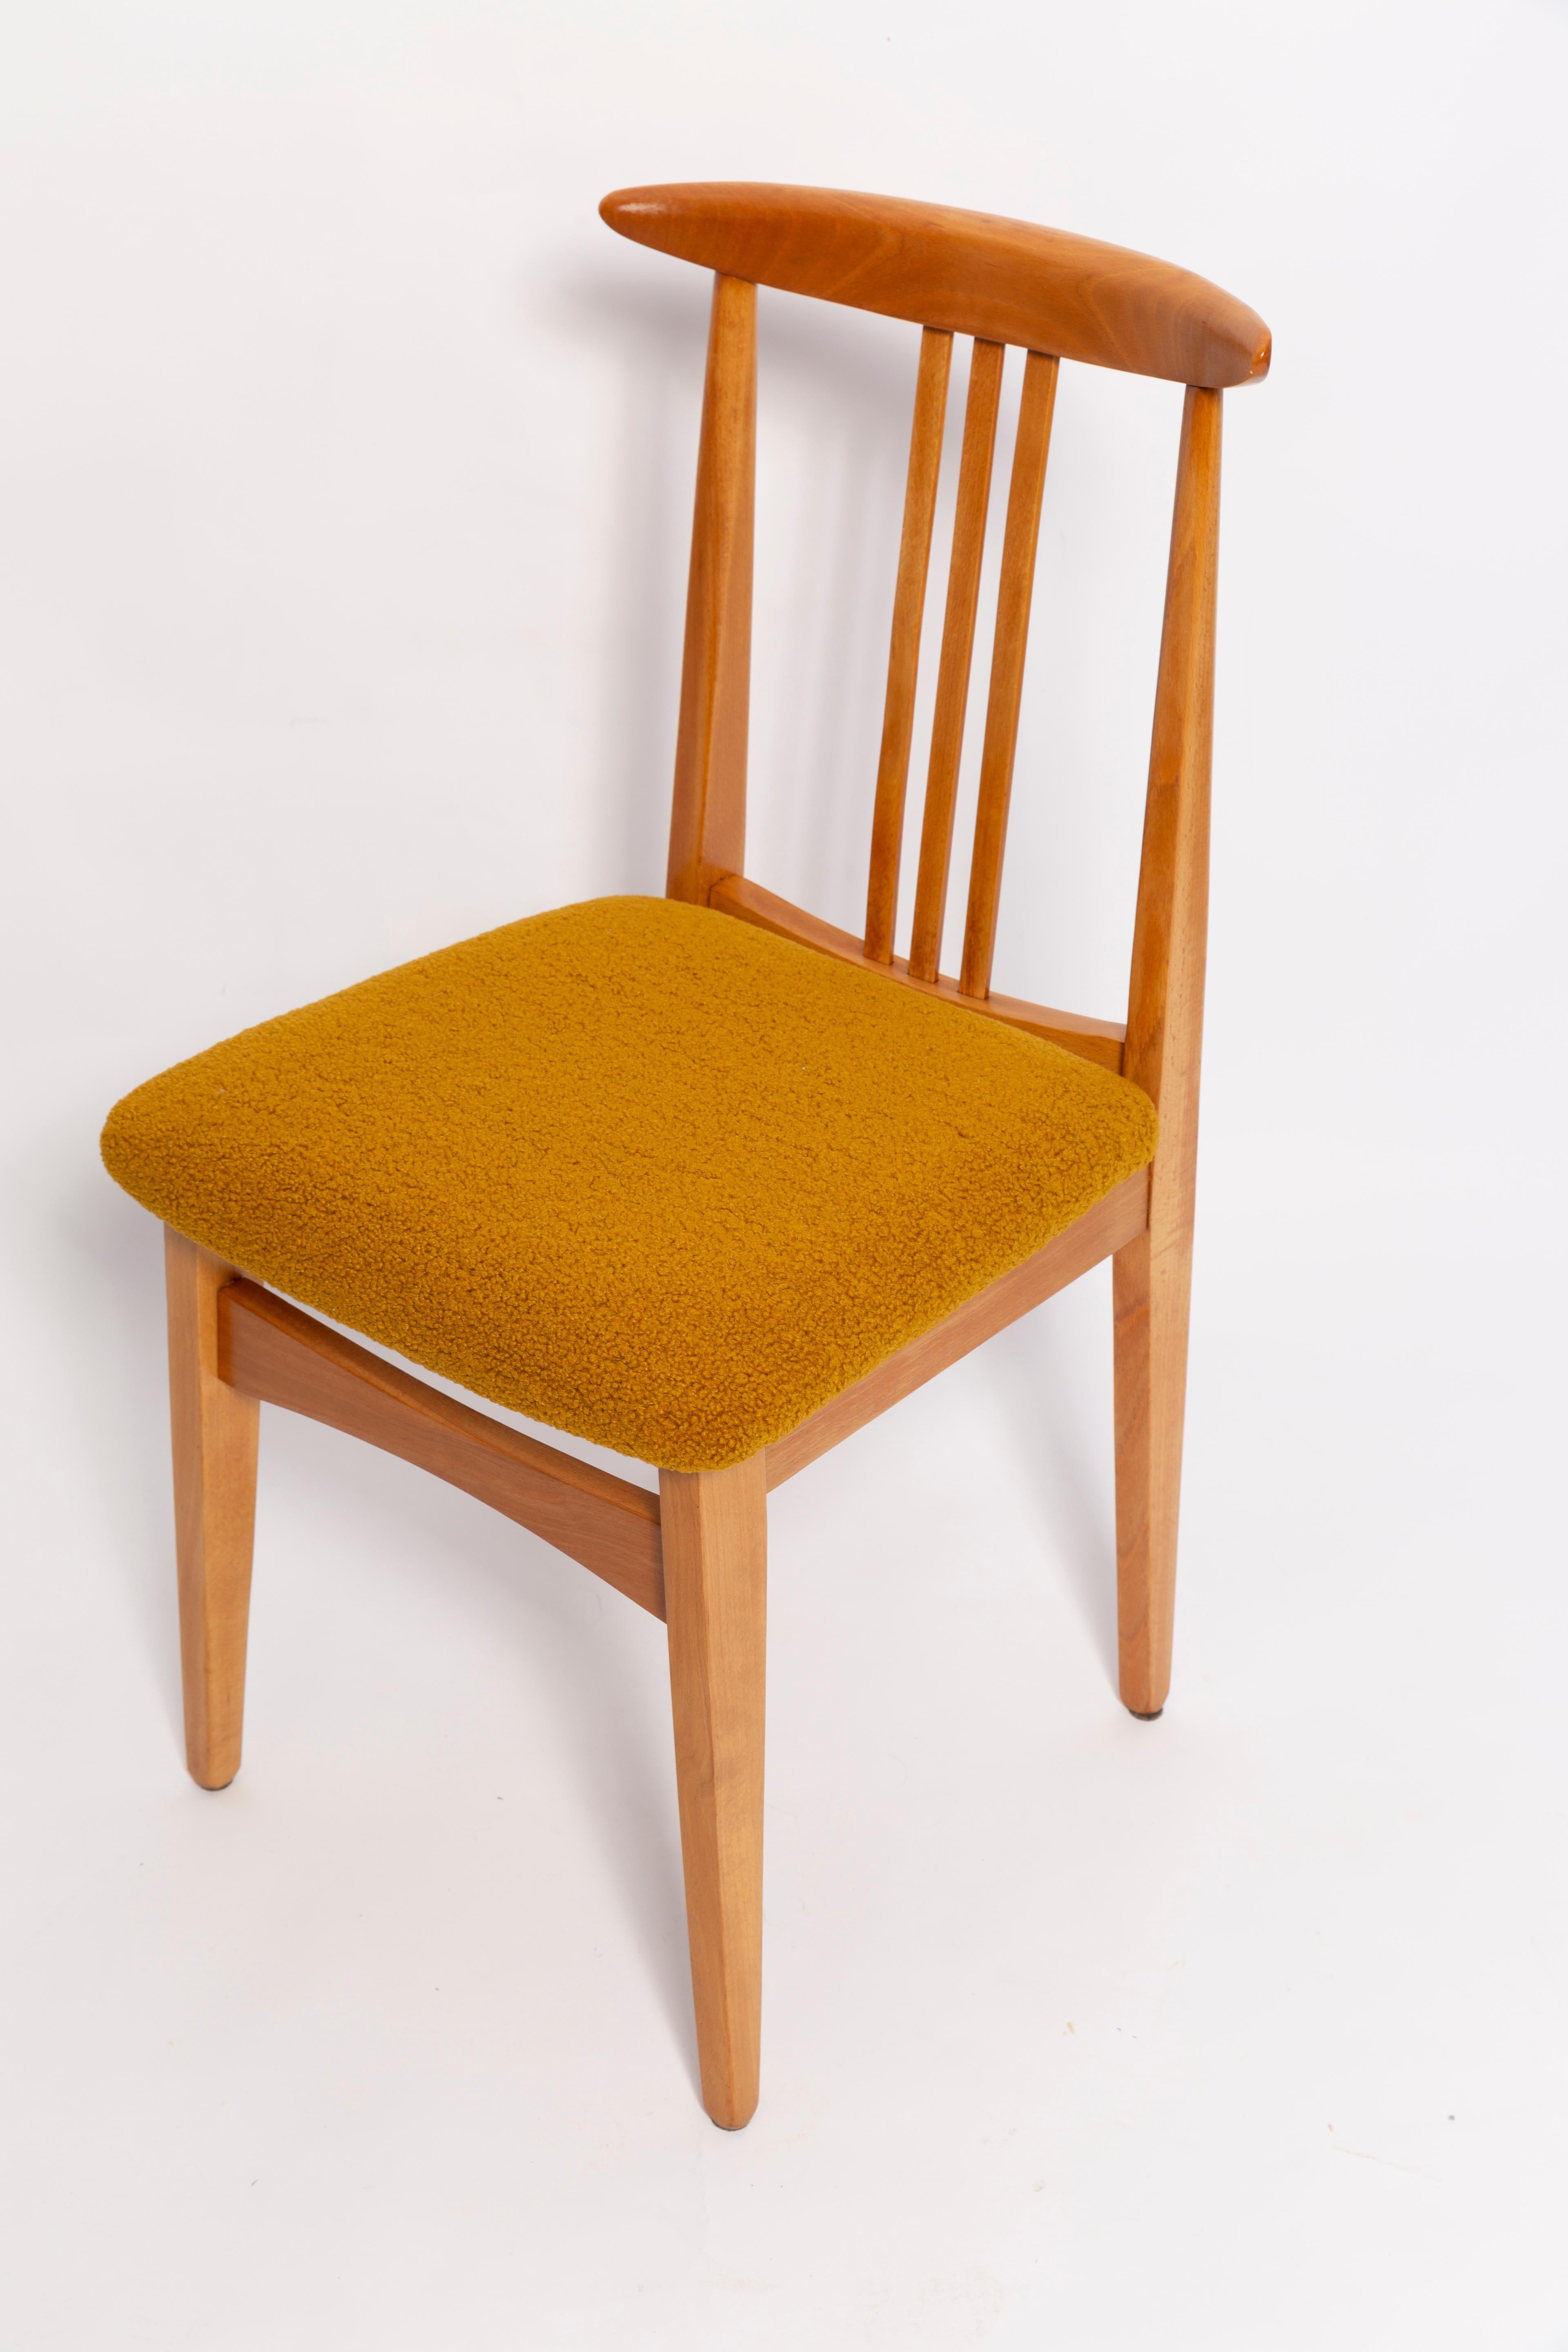 Polish Eight Mid-Century Ochre Boucle Chairs, Light Wood, M. Zielinski, Europe, 1960s For Sale